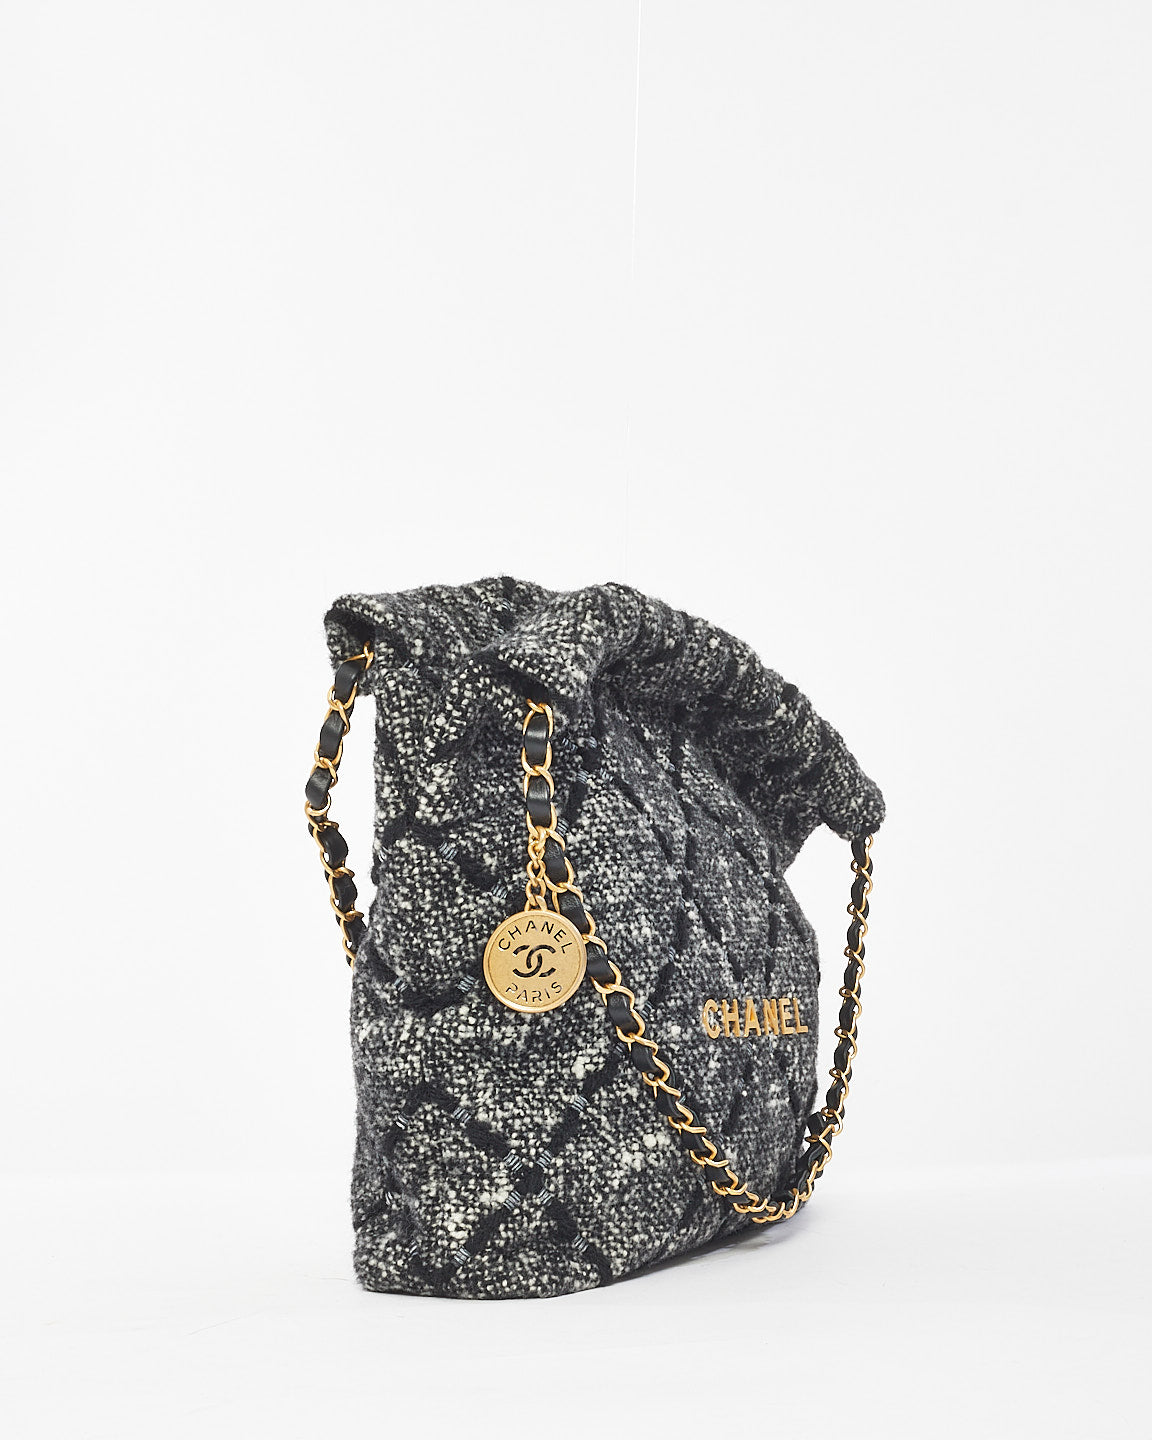 Chanel Black & Ecru Tweed Chanel 22 Bag